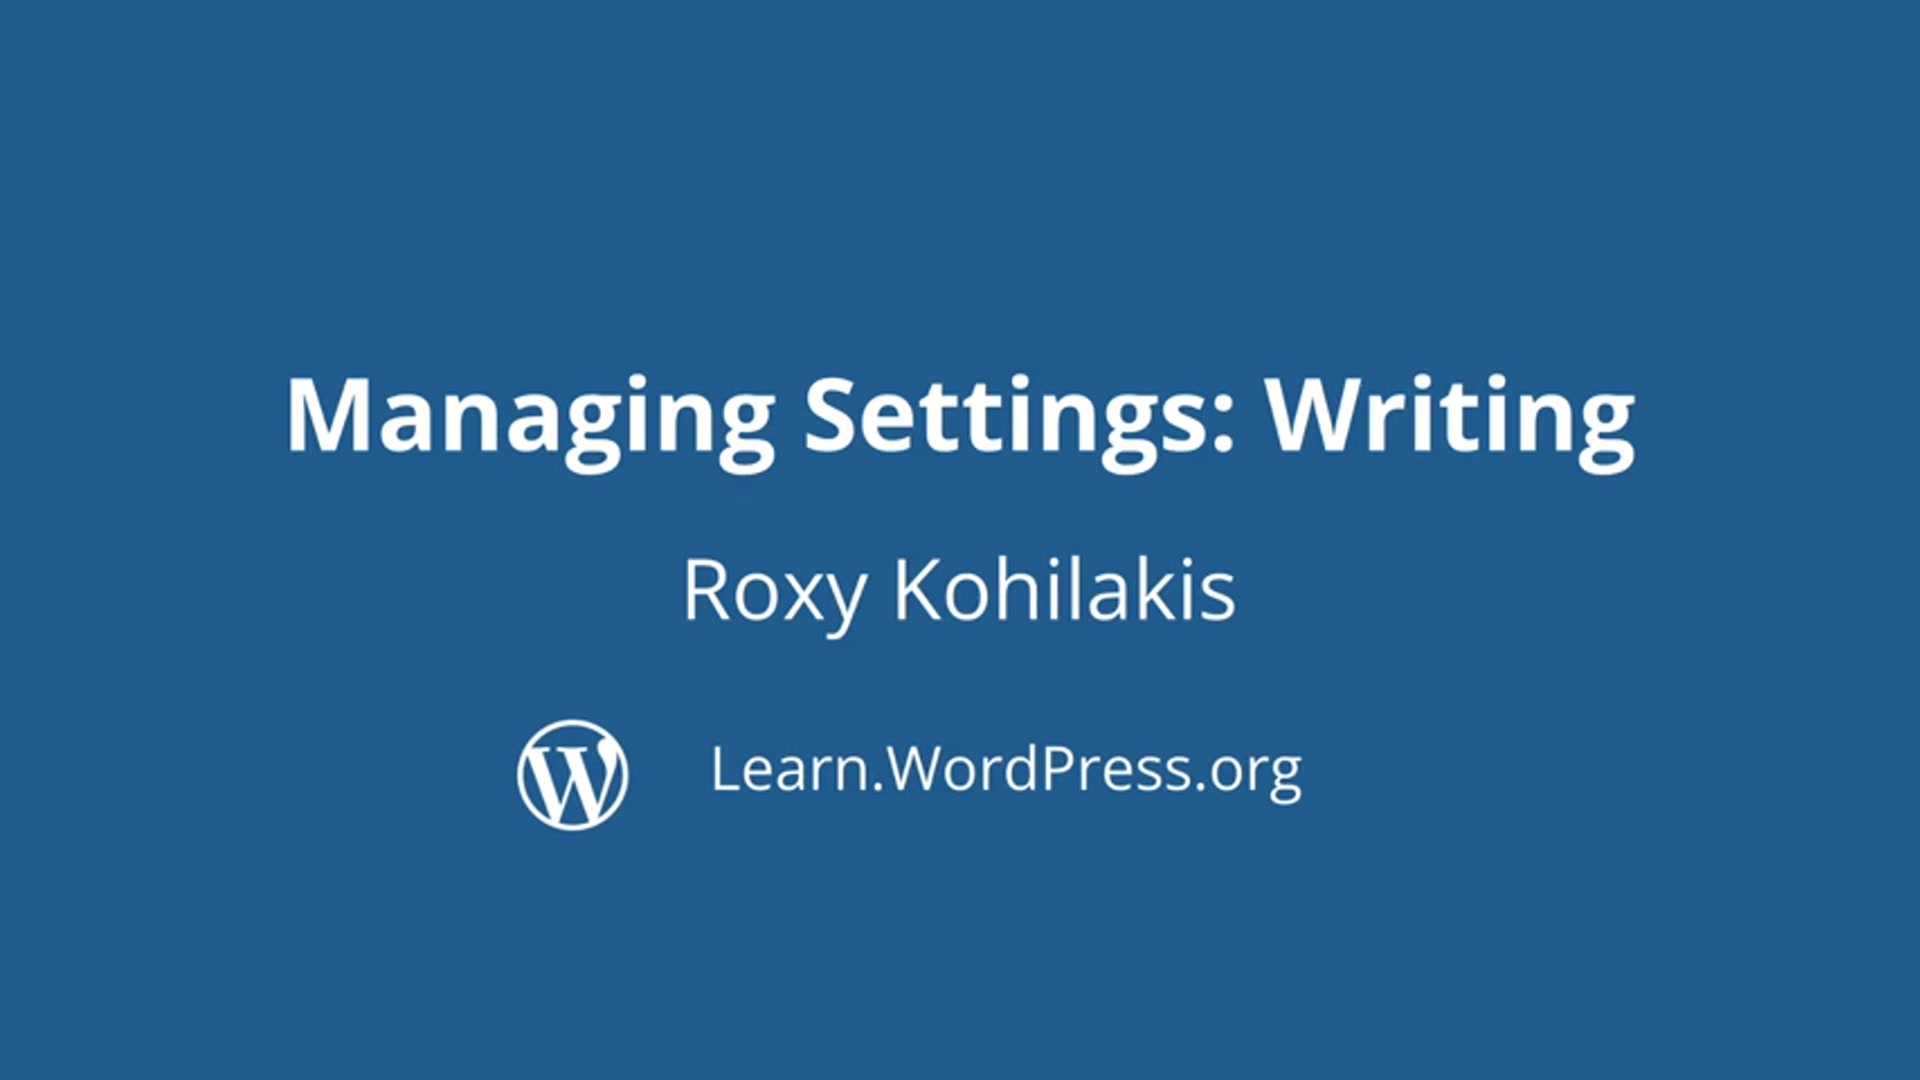 Roxy Kohilakis: Managing Writing Settings